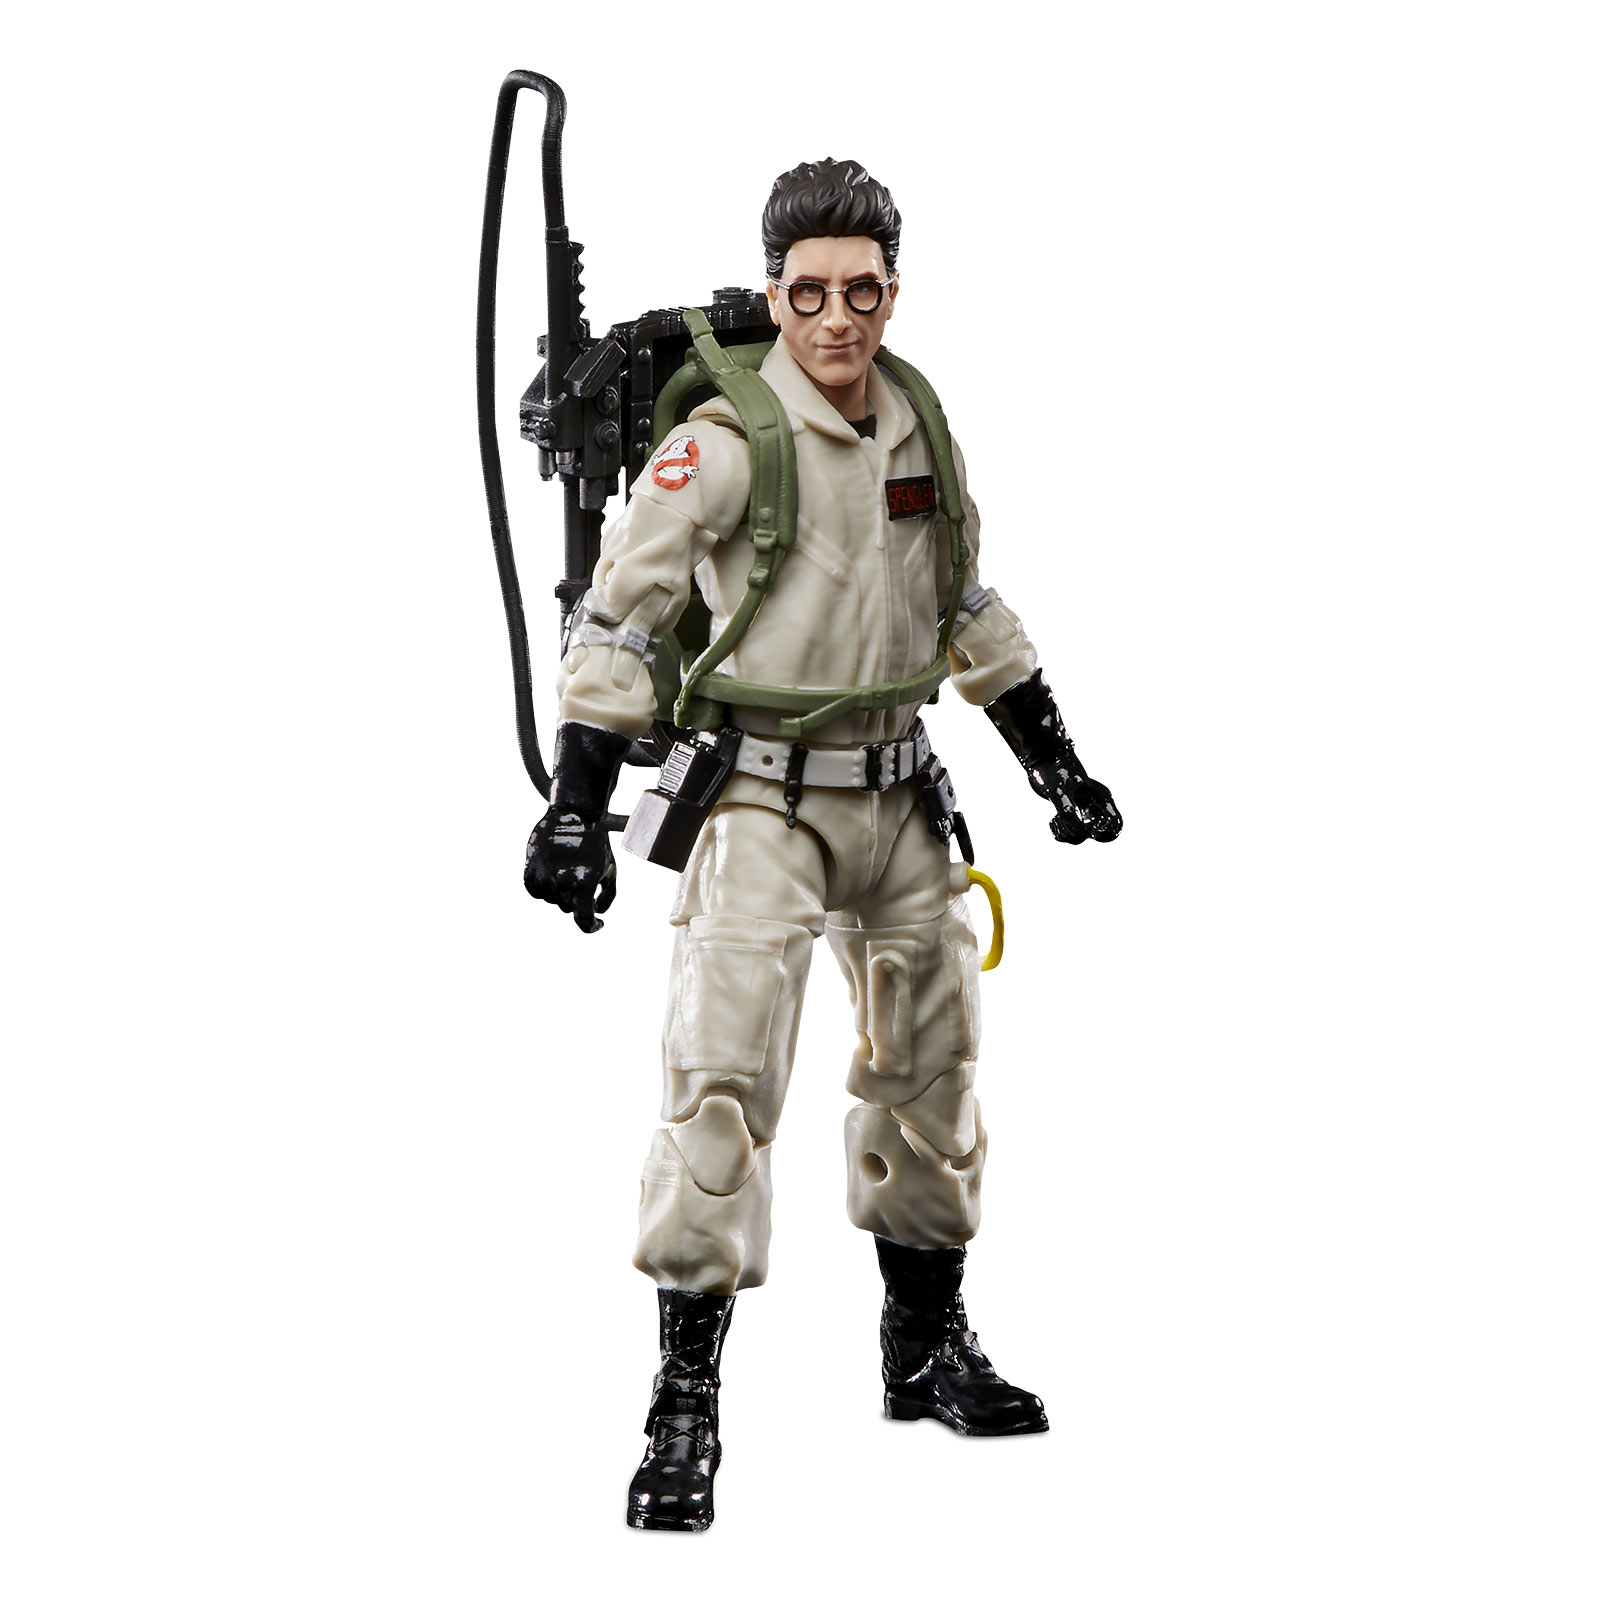 Ghostbusters - Dr. Egon Spengler action figure 15 cm